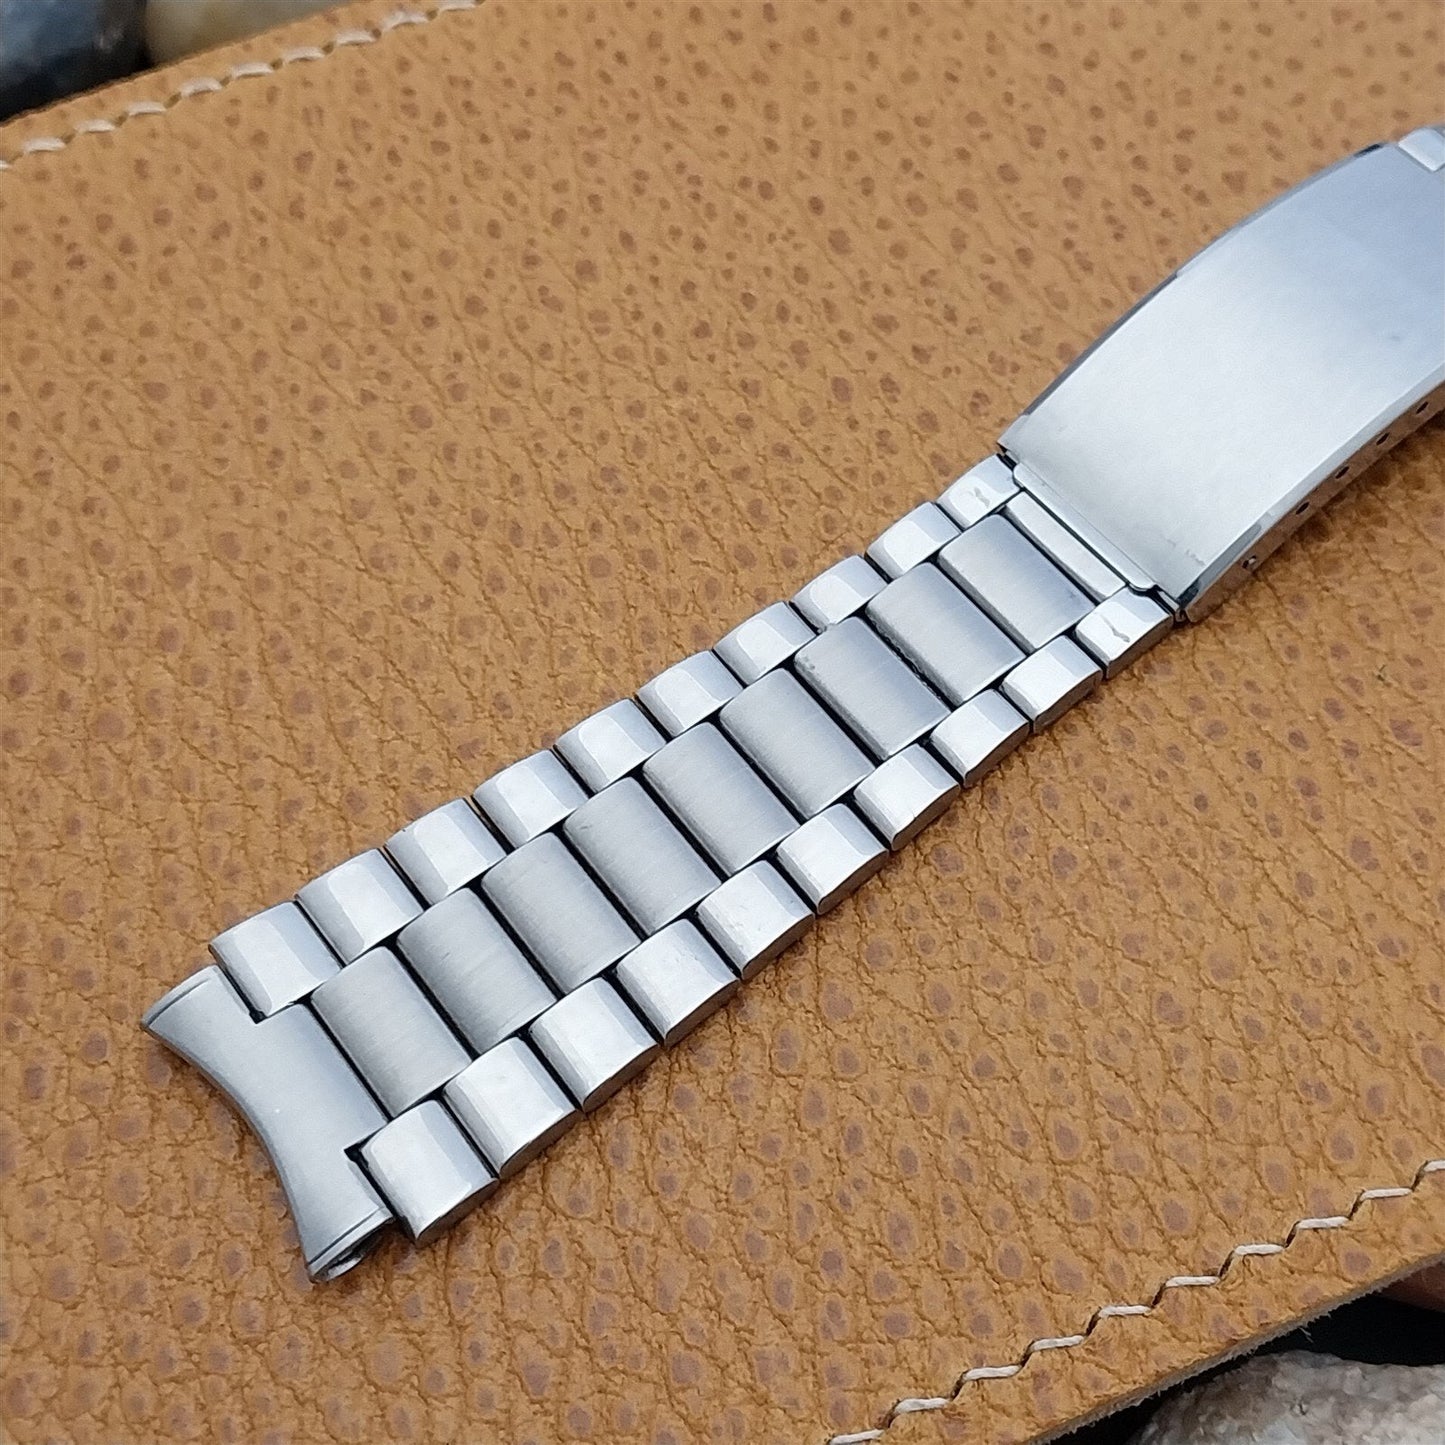 19mm Stainless Steel Kreisler Stelux Mint nos Vintage Watch Band